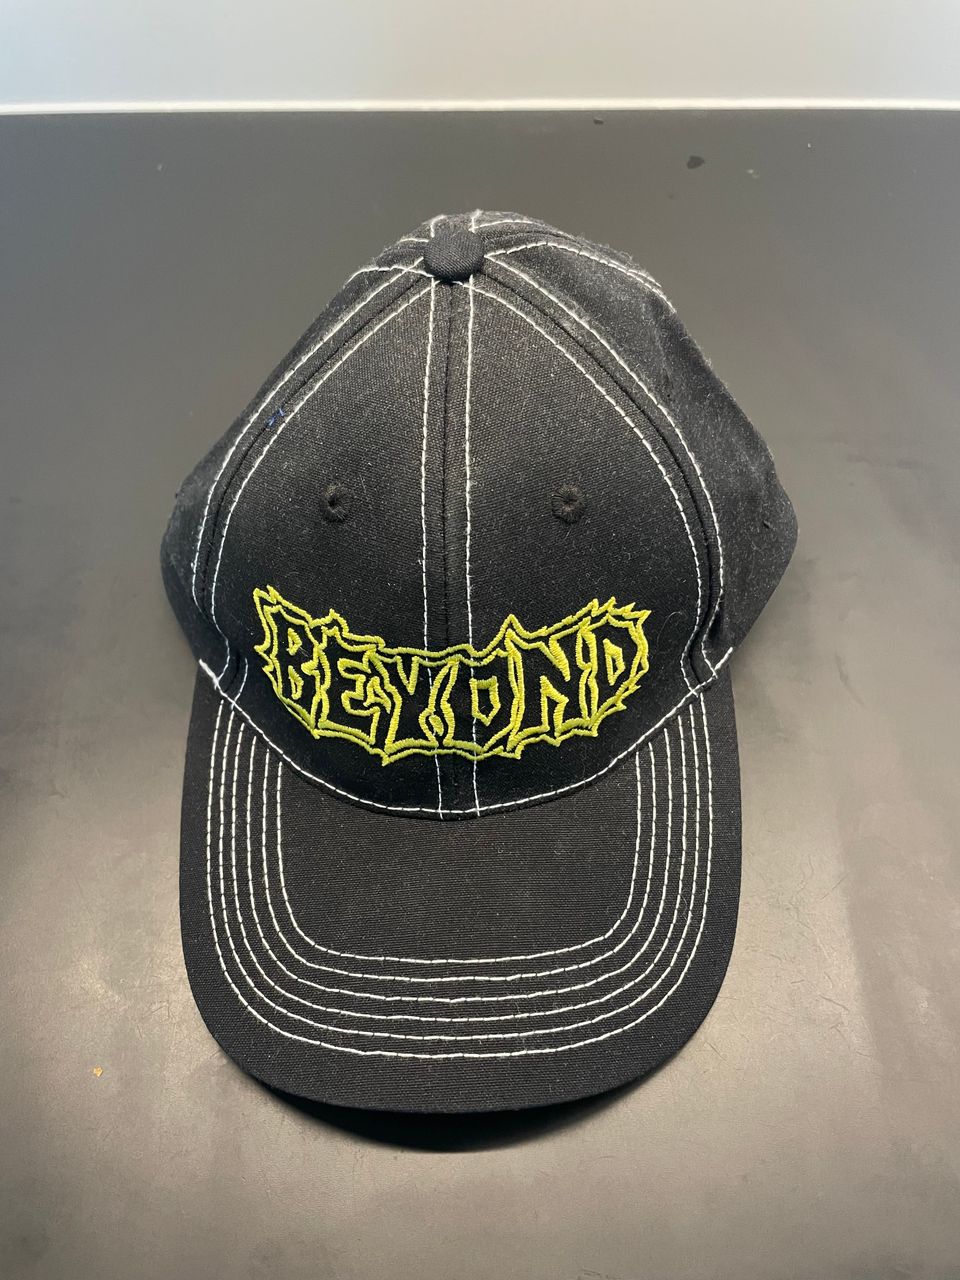 Beyond devils cap